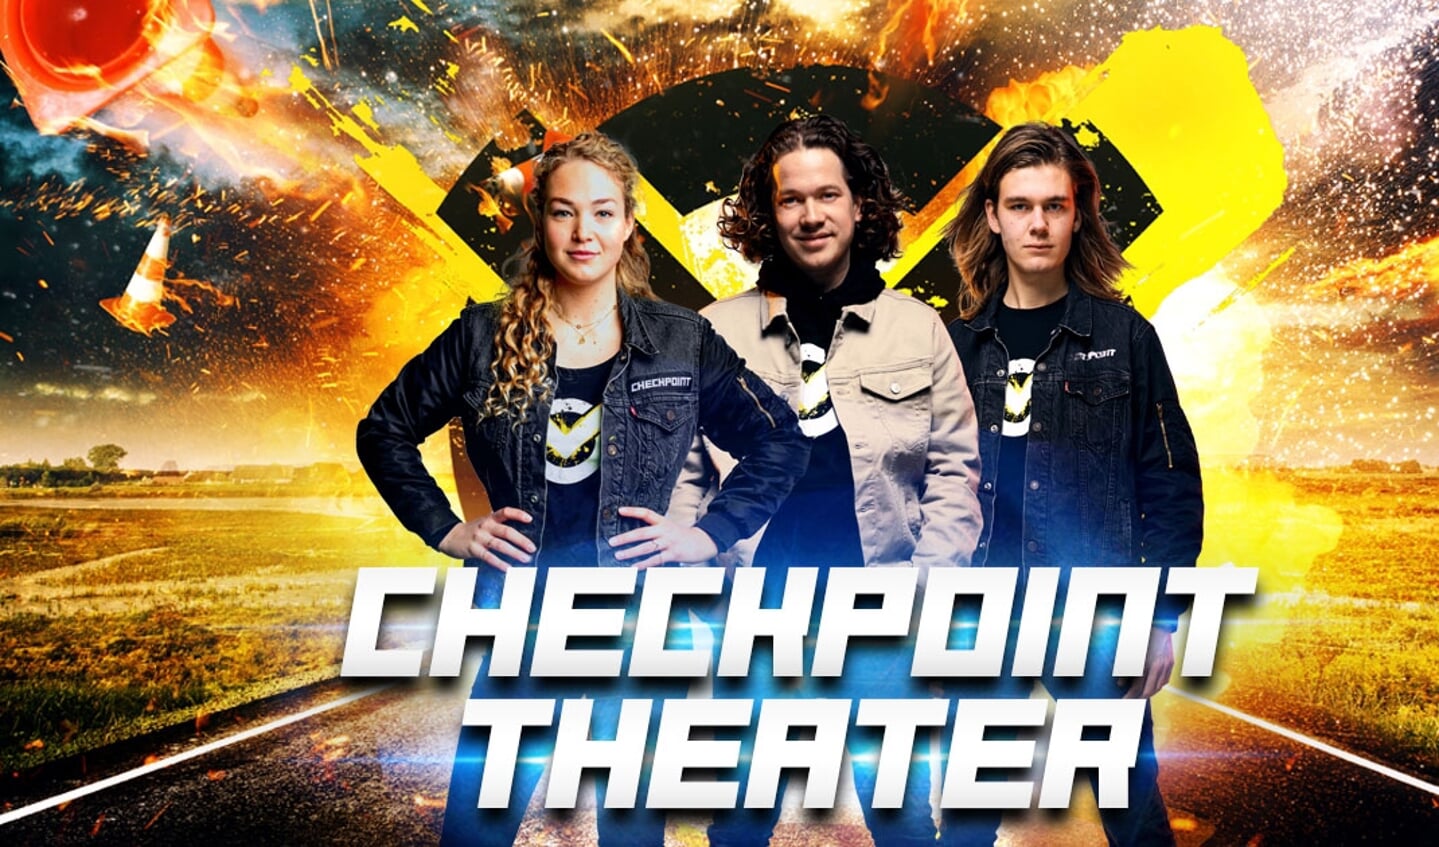 Checkpoint Theater - Vetter dan ooit